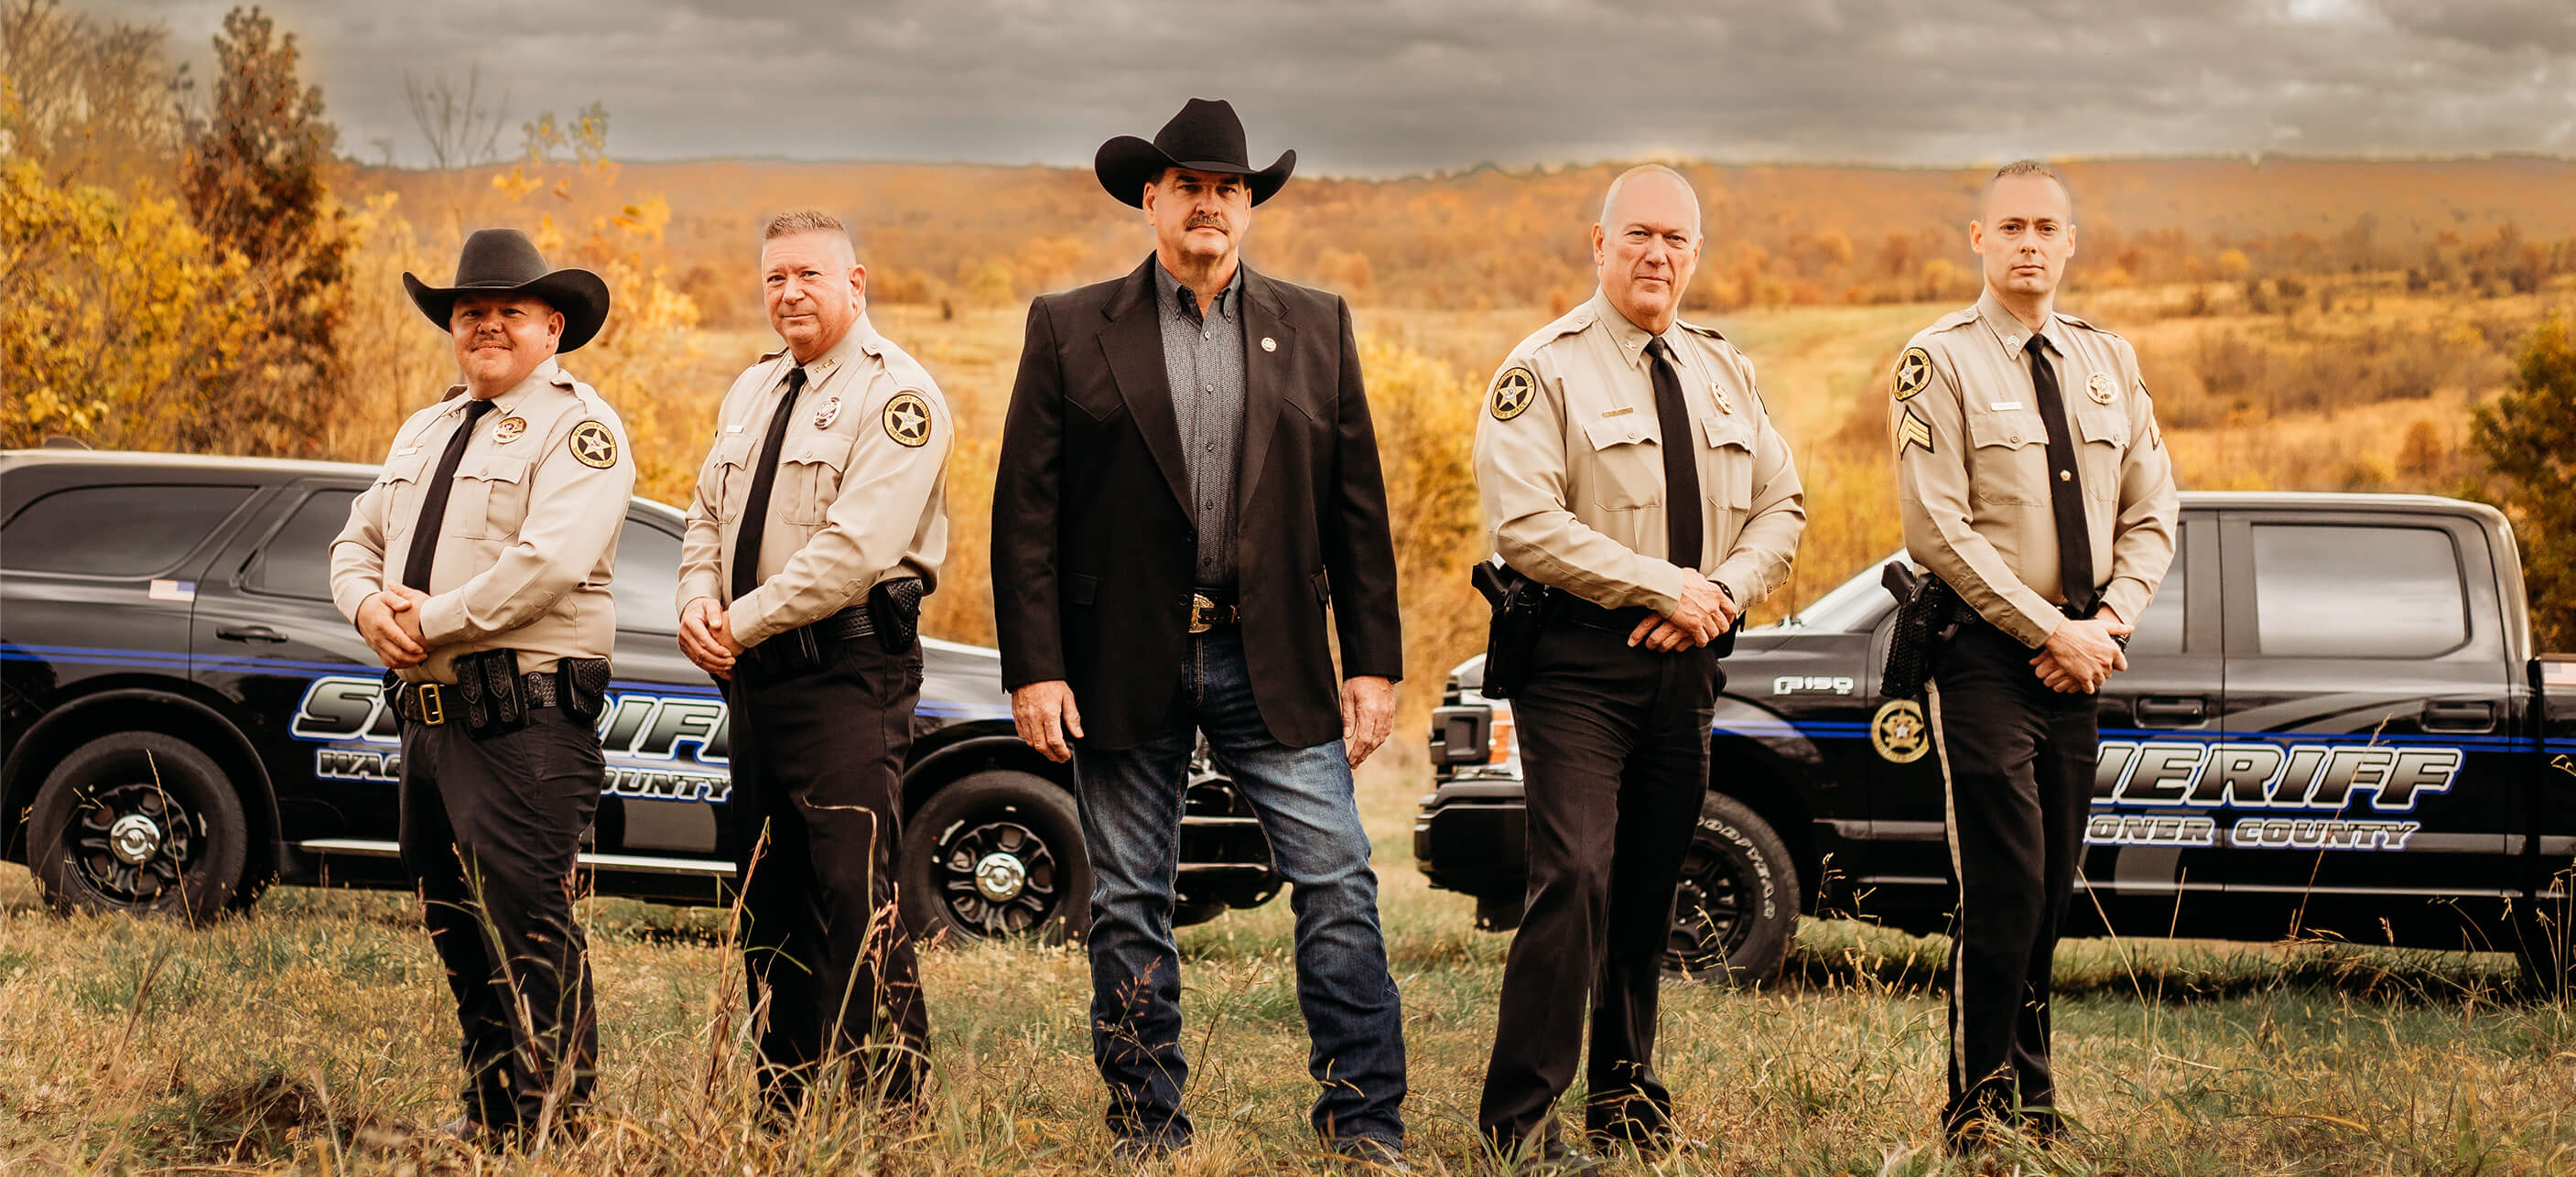 sheriff elliott with sheriff deputies